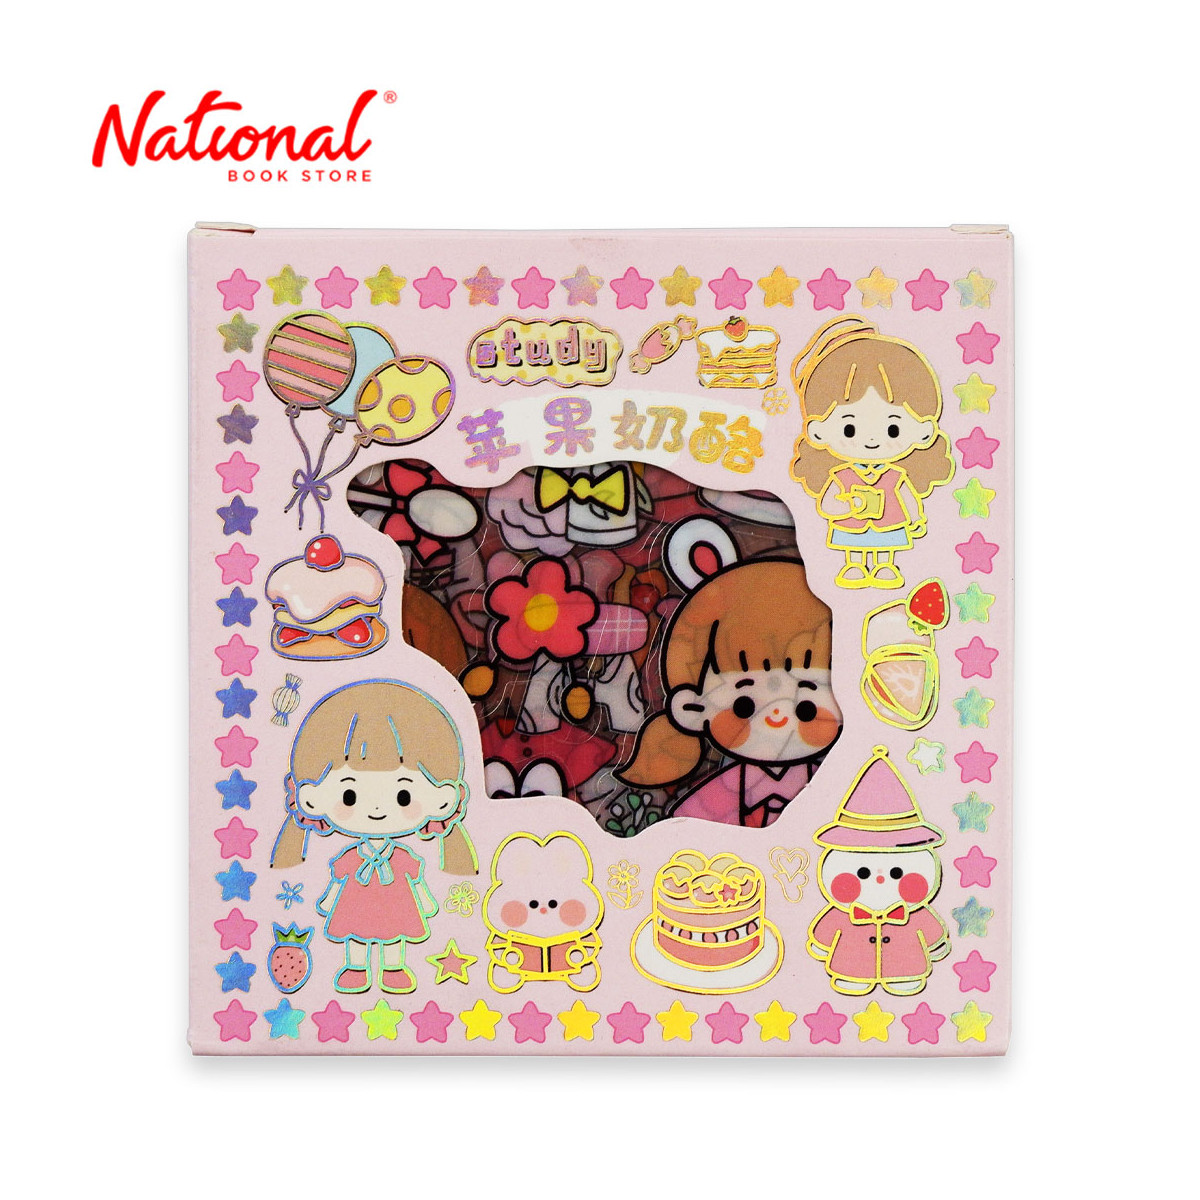 Kawaii Sticker Pack No. 8 -100s - Stationery Items - DIY Arts & Crafts